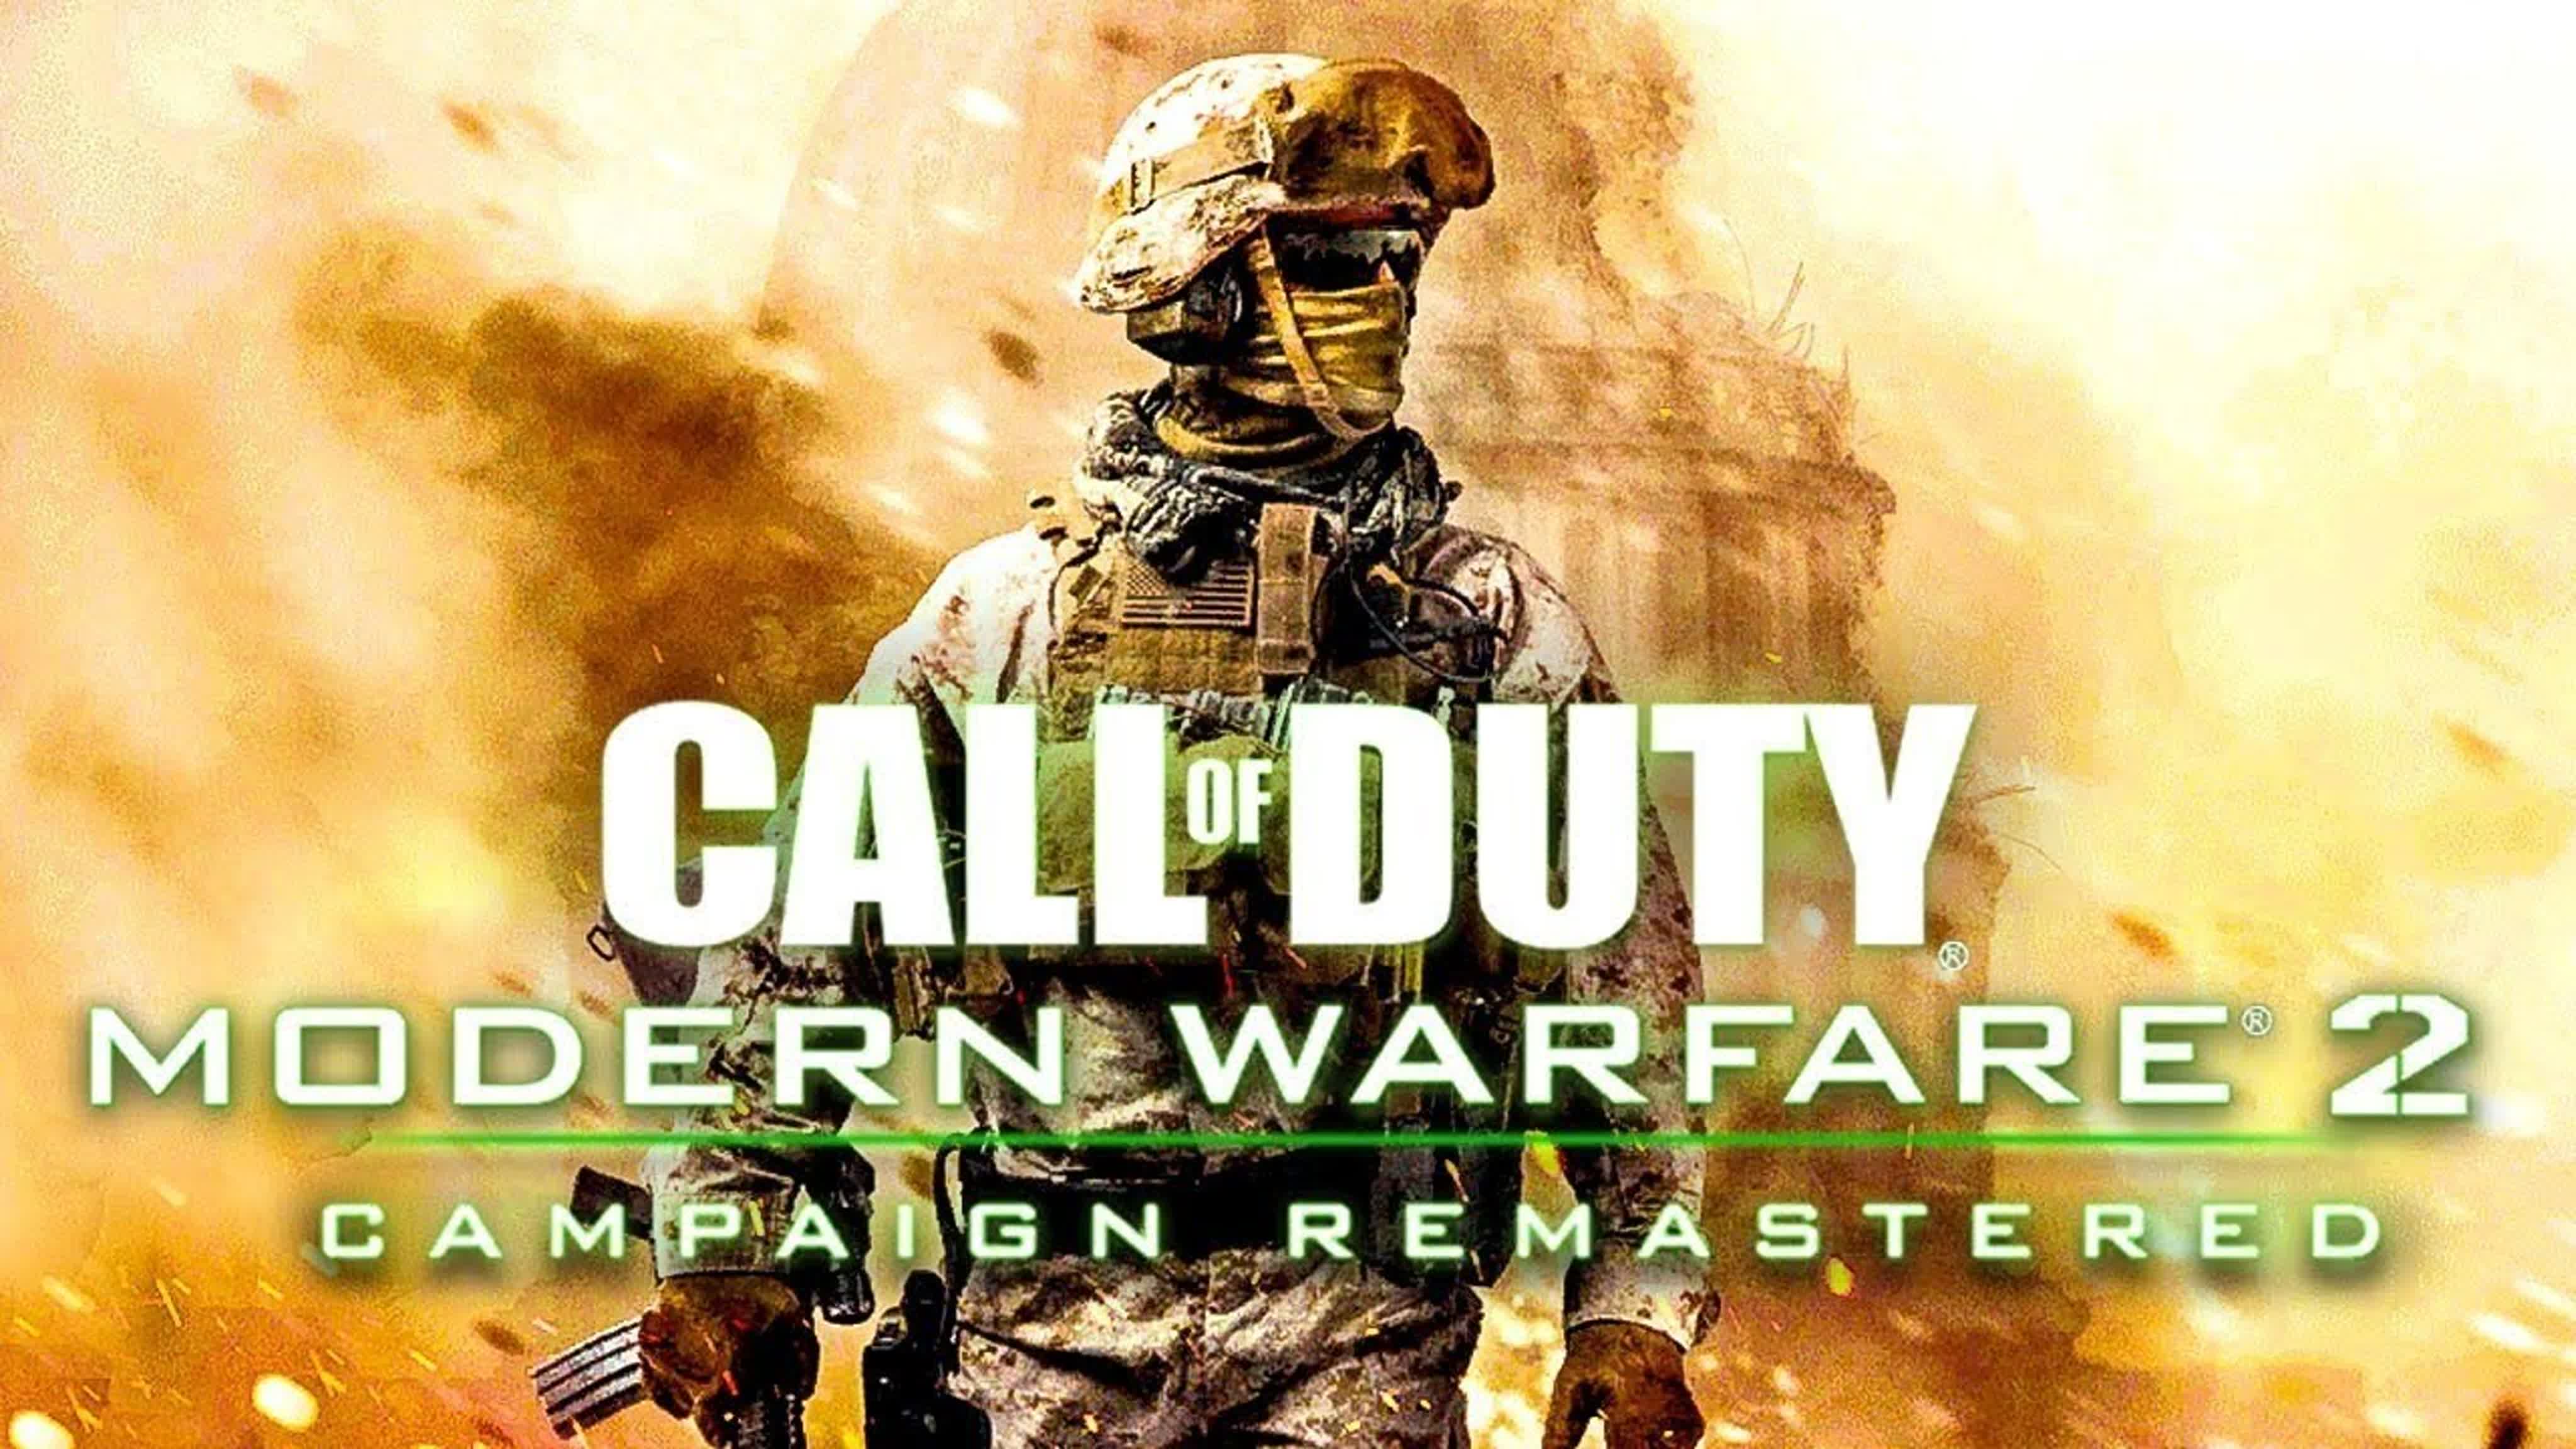 COD Modern Warfare 2 Campaign Remastered [ЗАВЕРШЕНО]